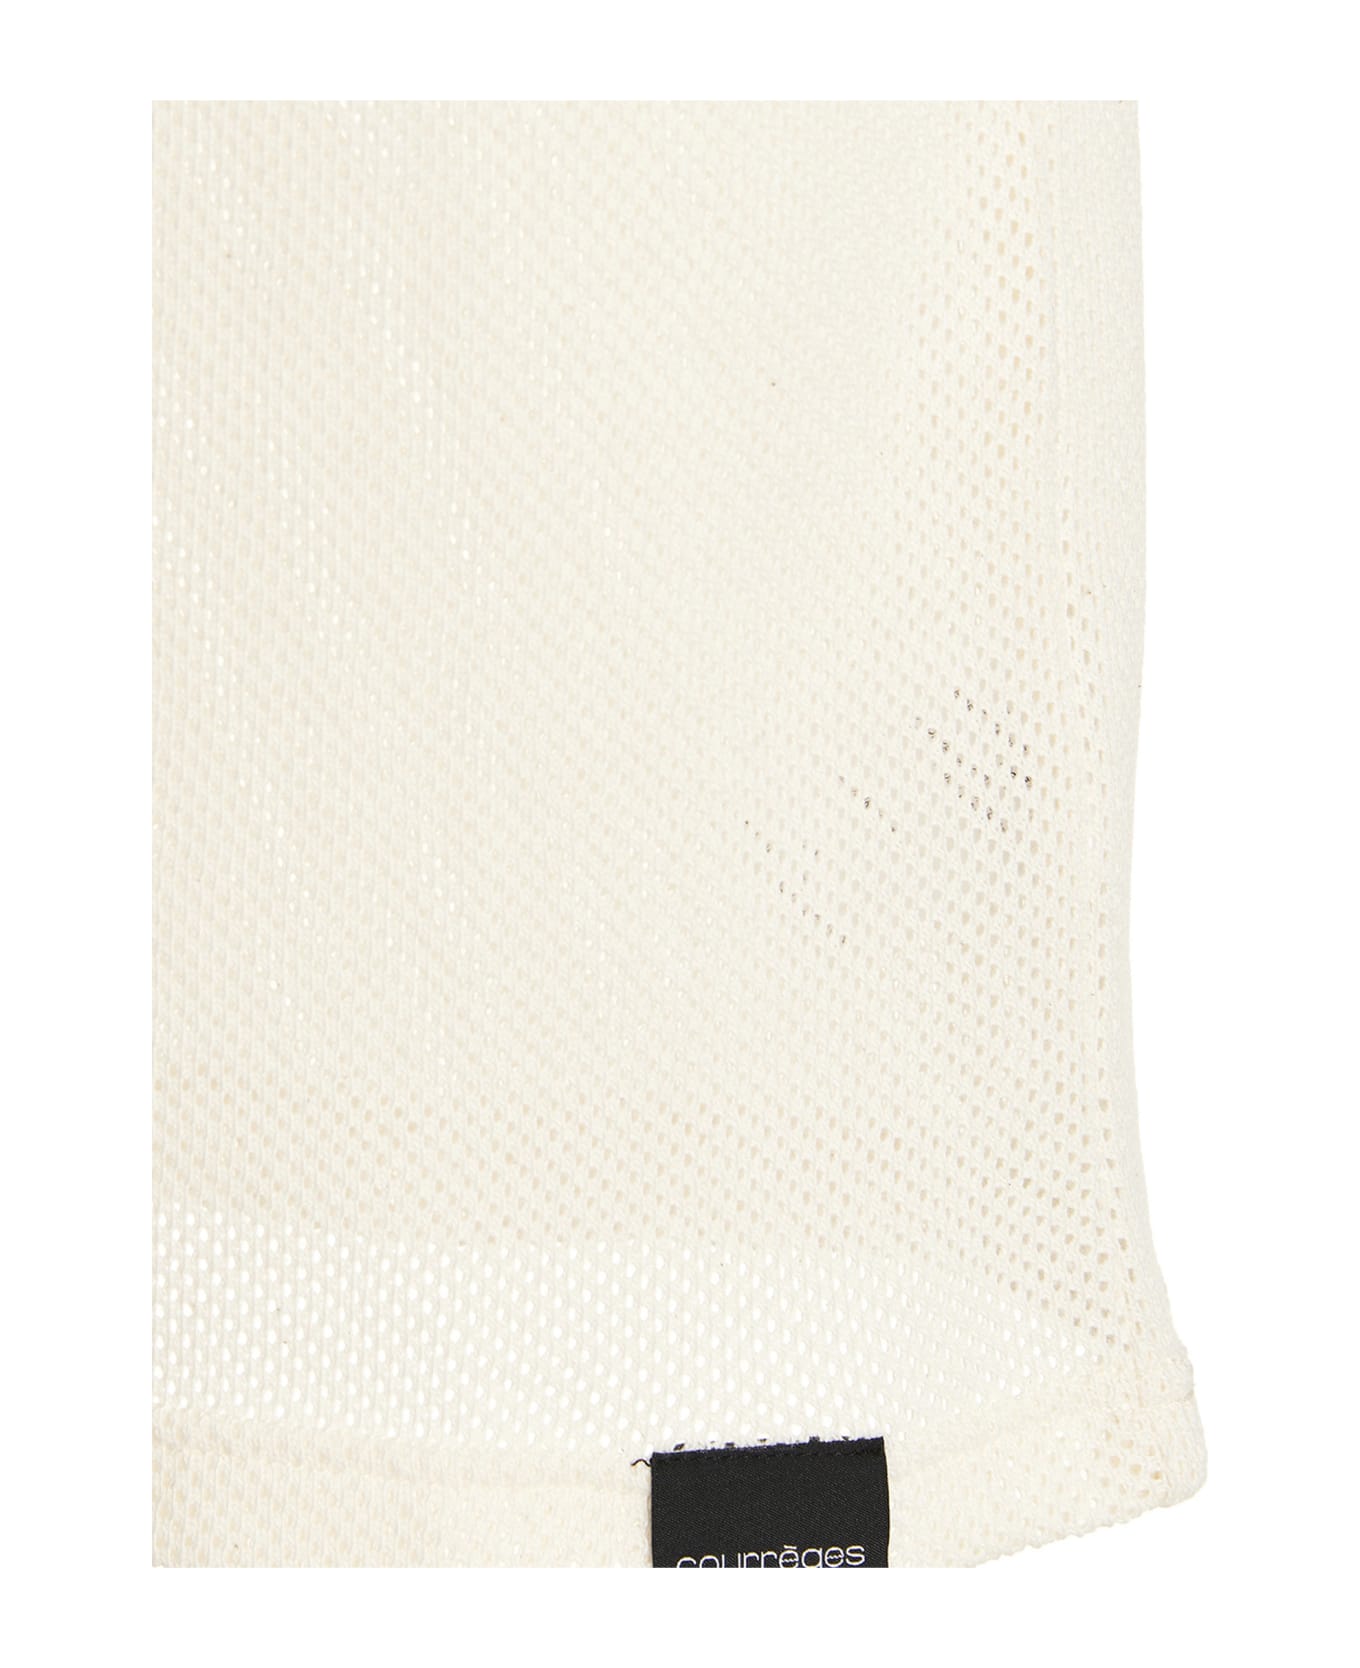 Courrèges Logo Mesh T-shirt - White